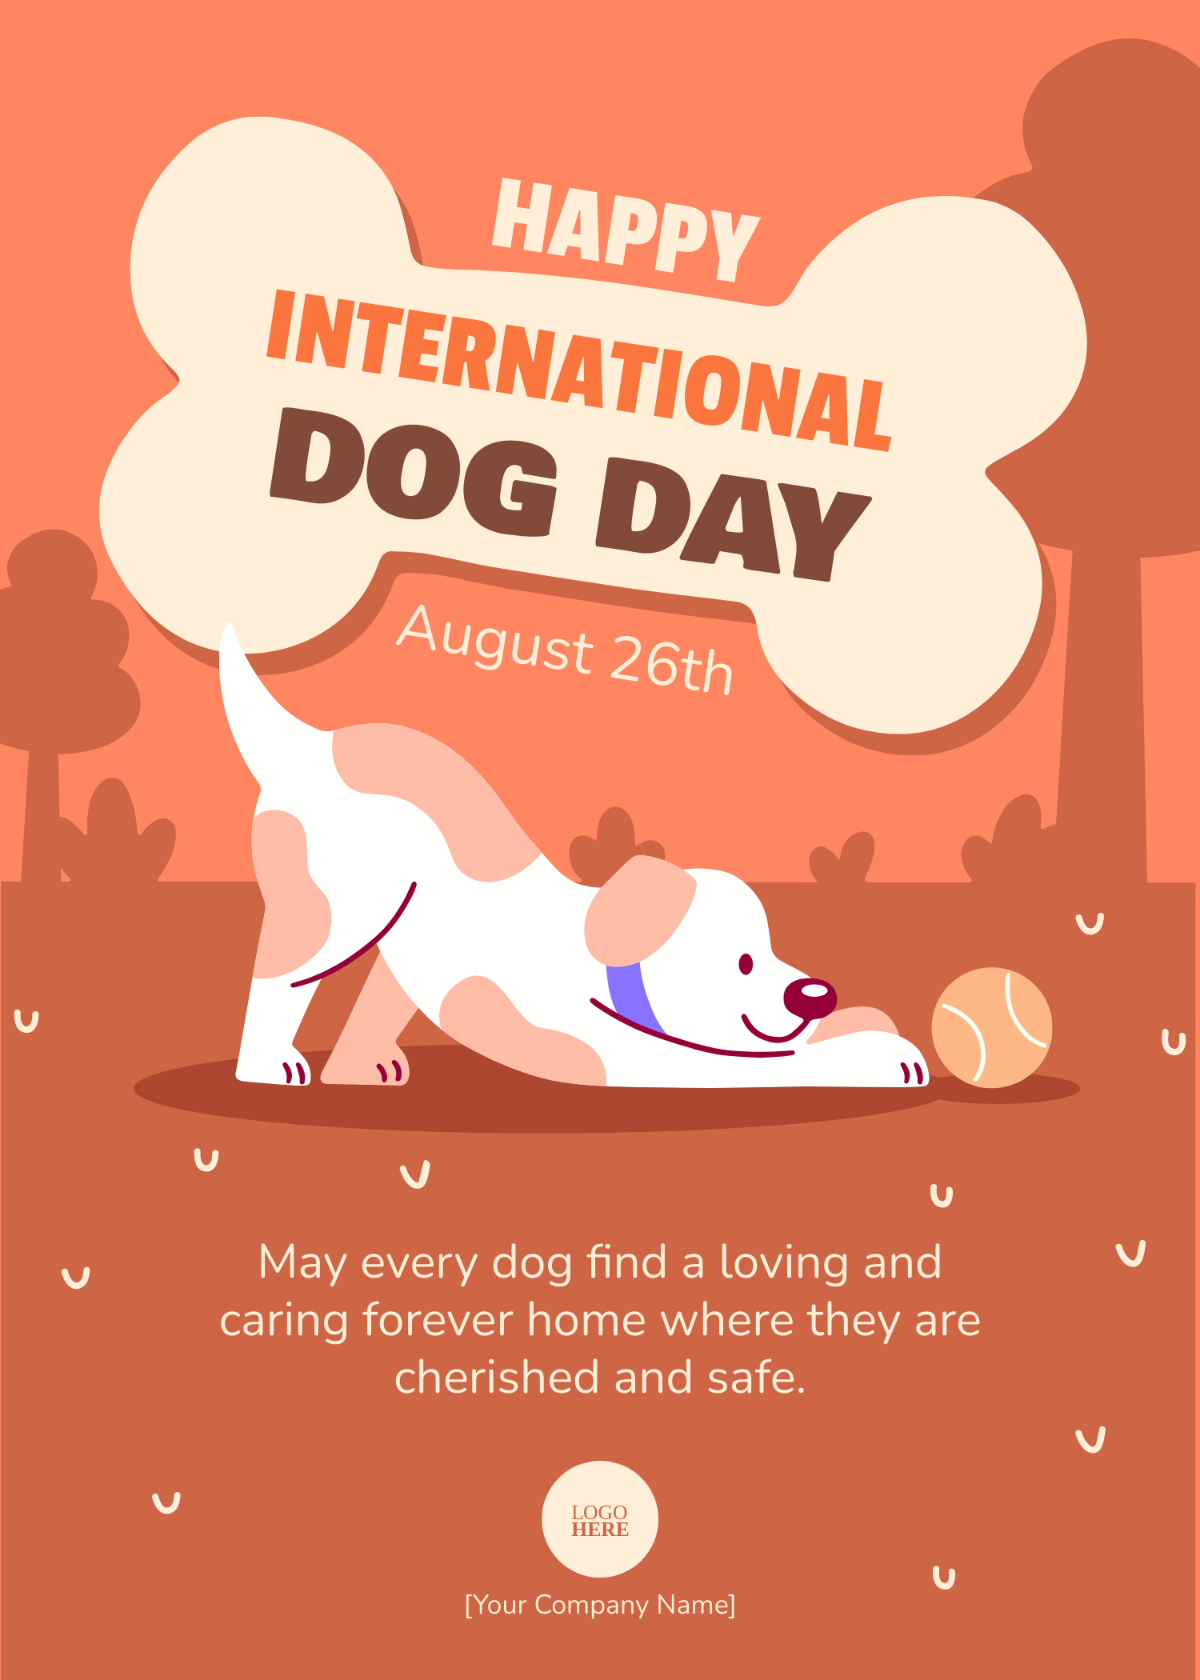 Happy International Dog Day Wishes